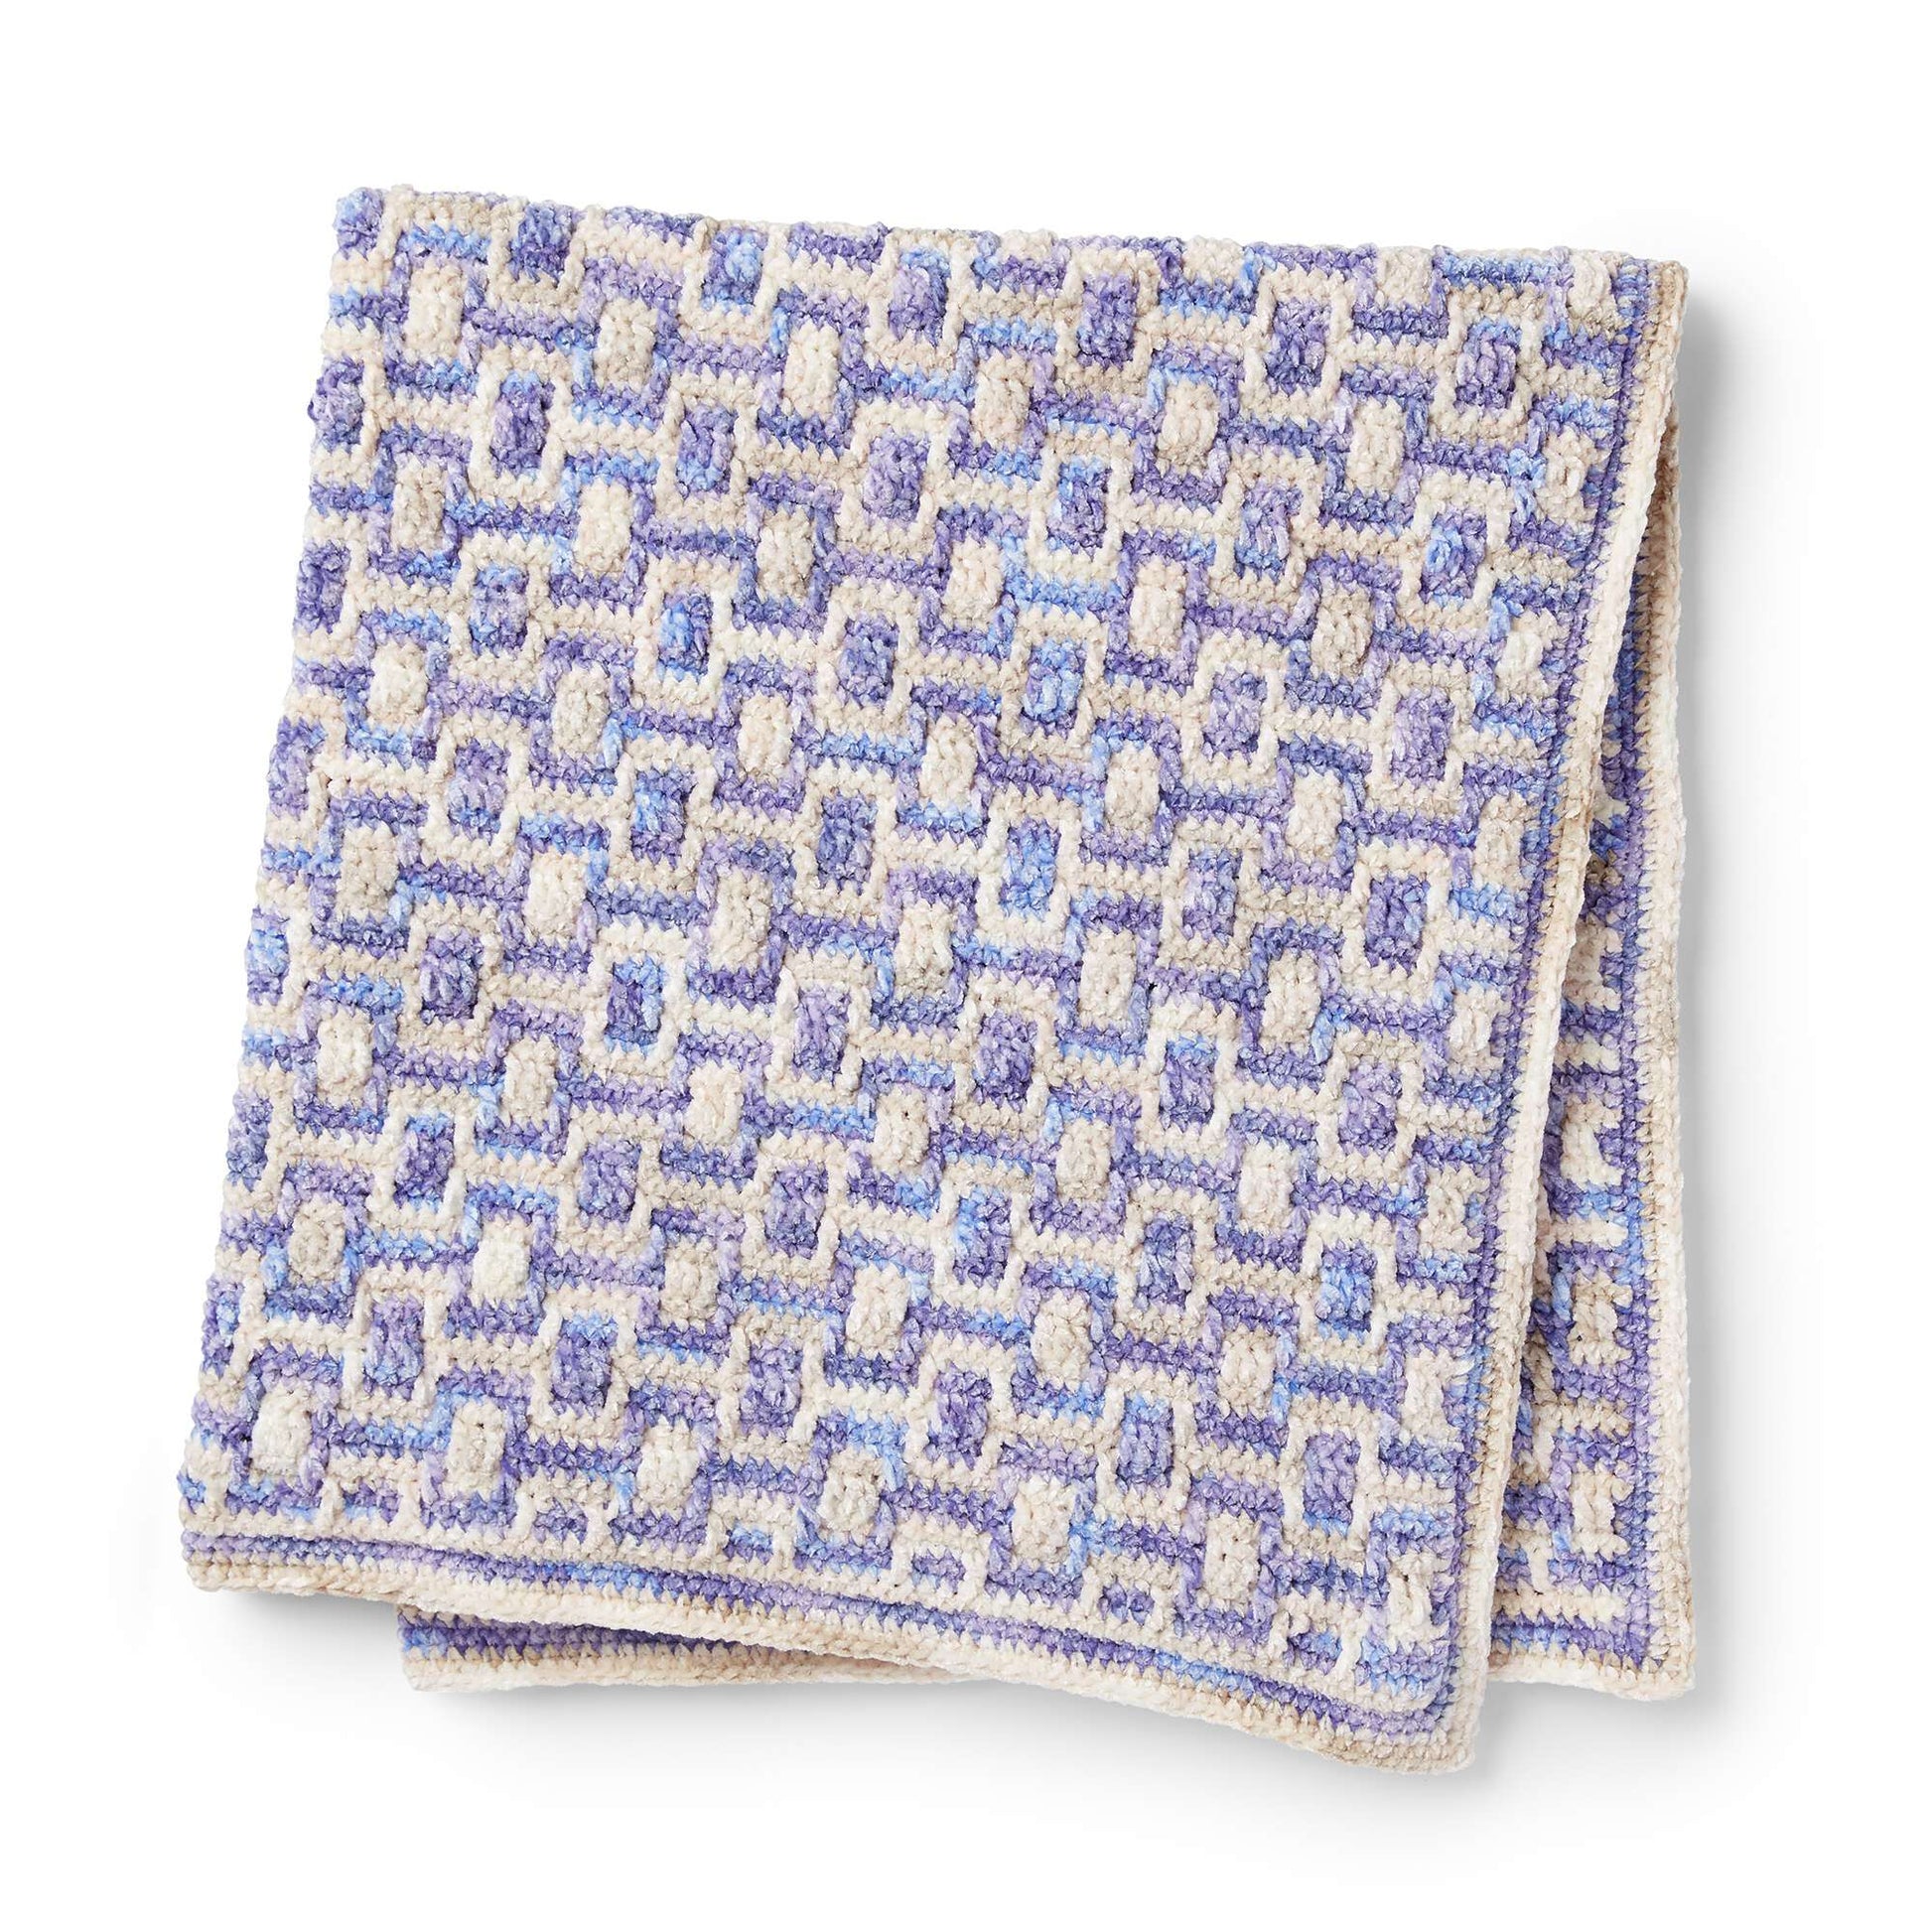 Free Bernat Mosaic Crochet Blanket Pattern